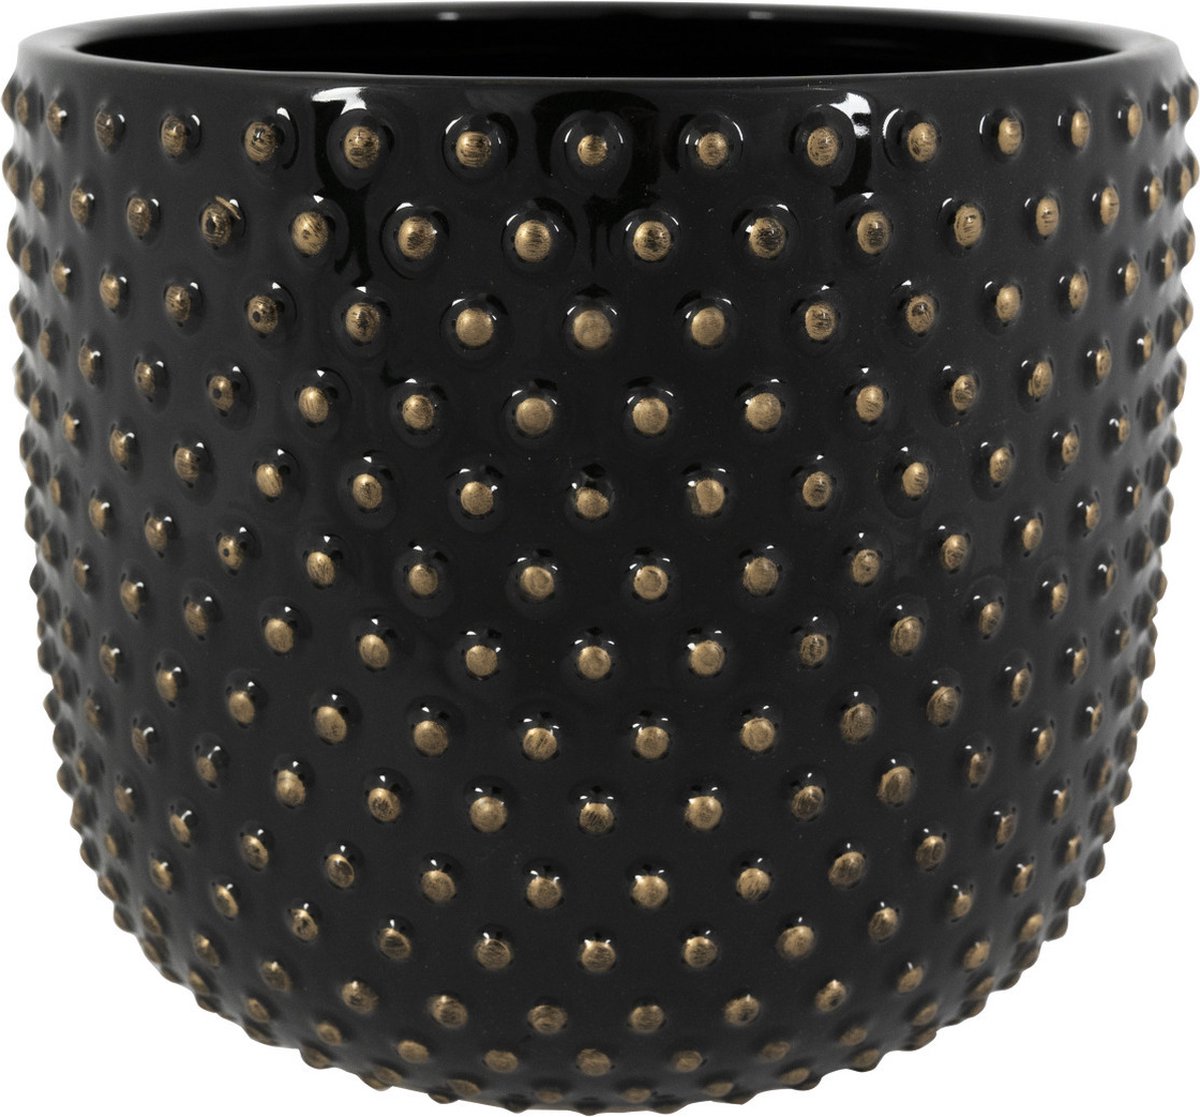 Ter Steege Plantenpot/bloempot Luxery Spike - keramiek - zwart - Bolletjes motief - D18 x H15 cm